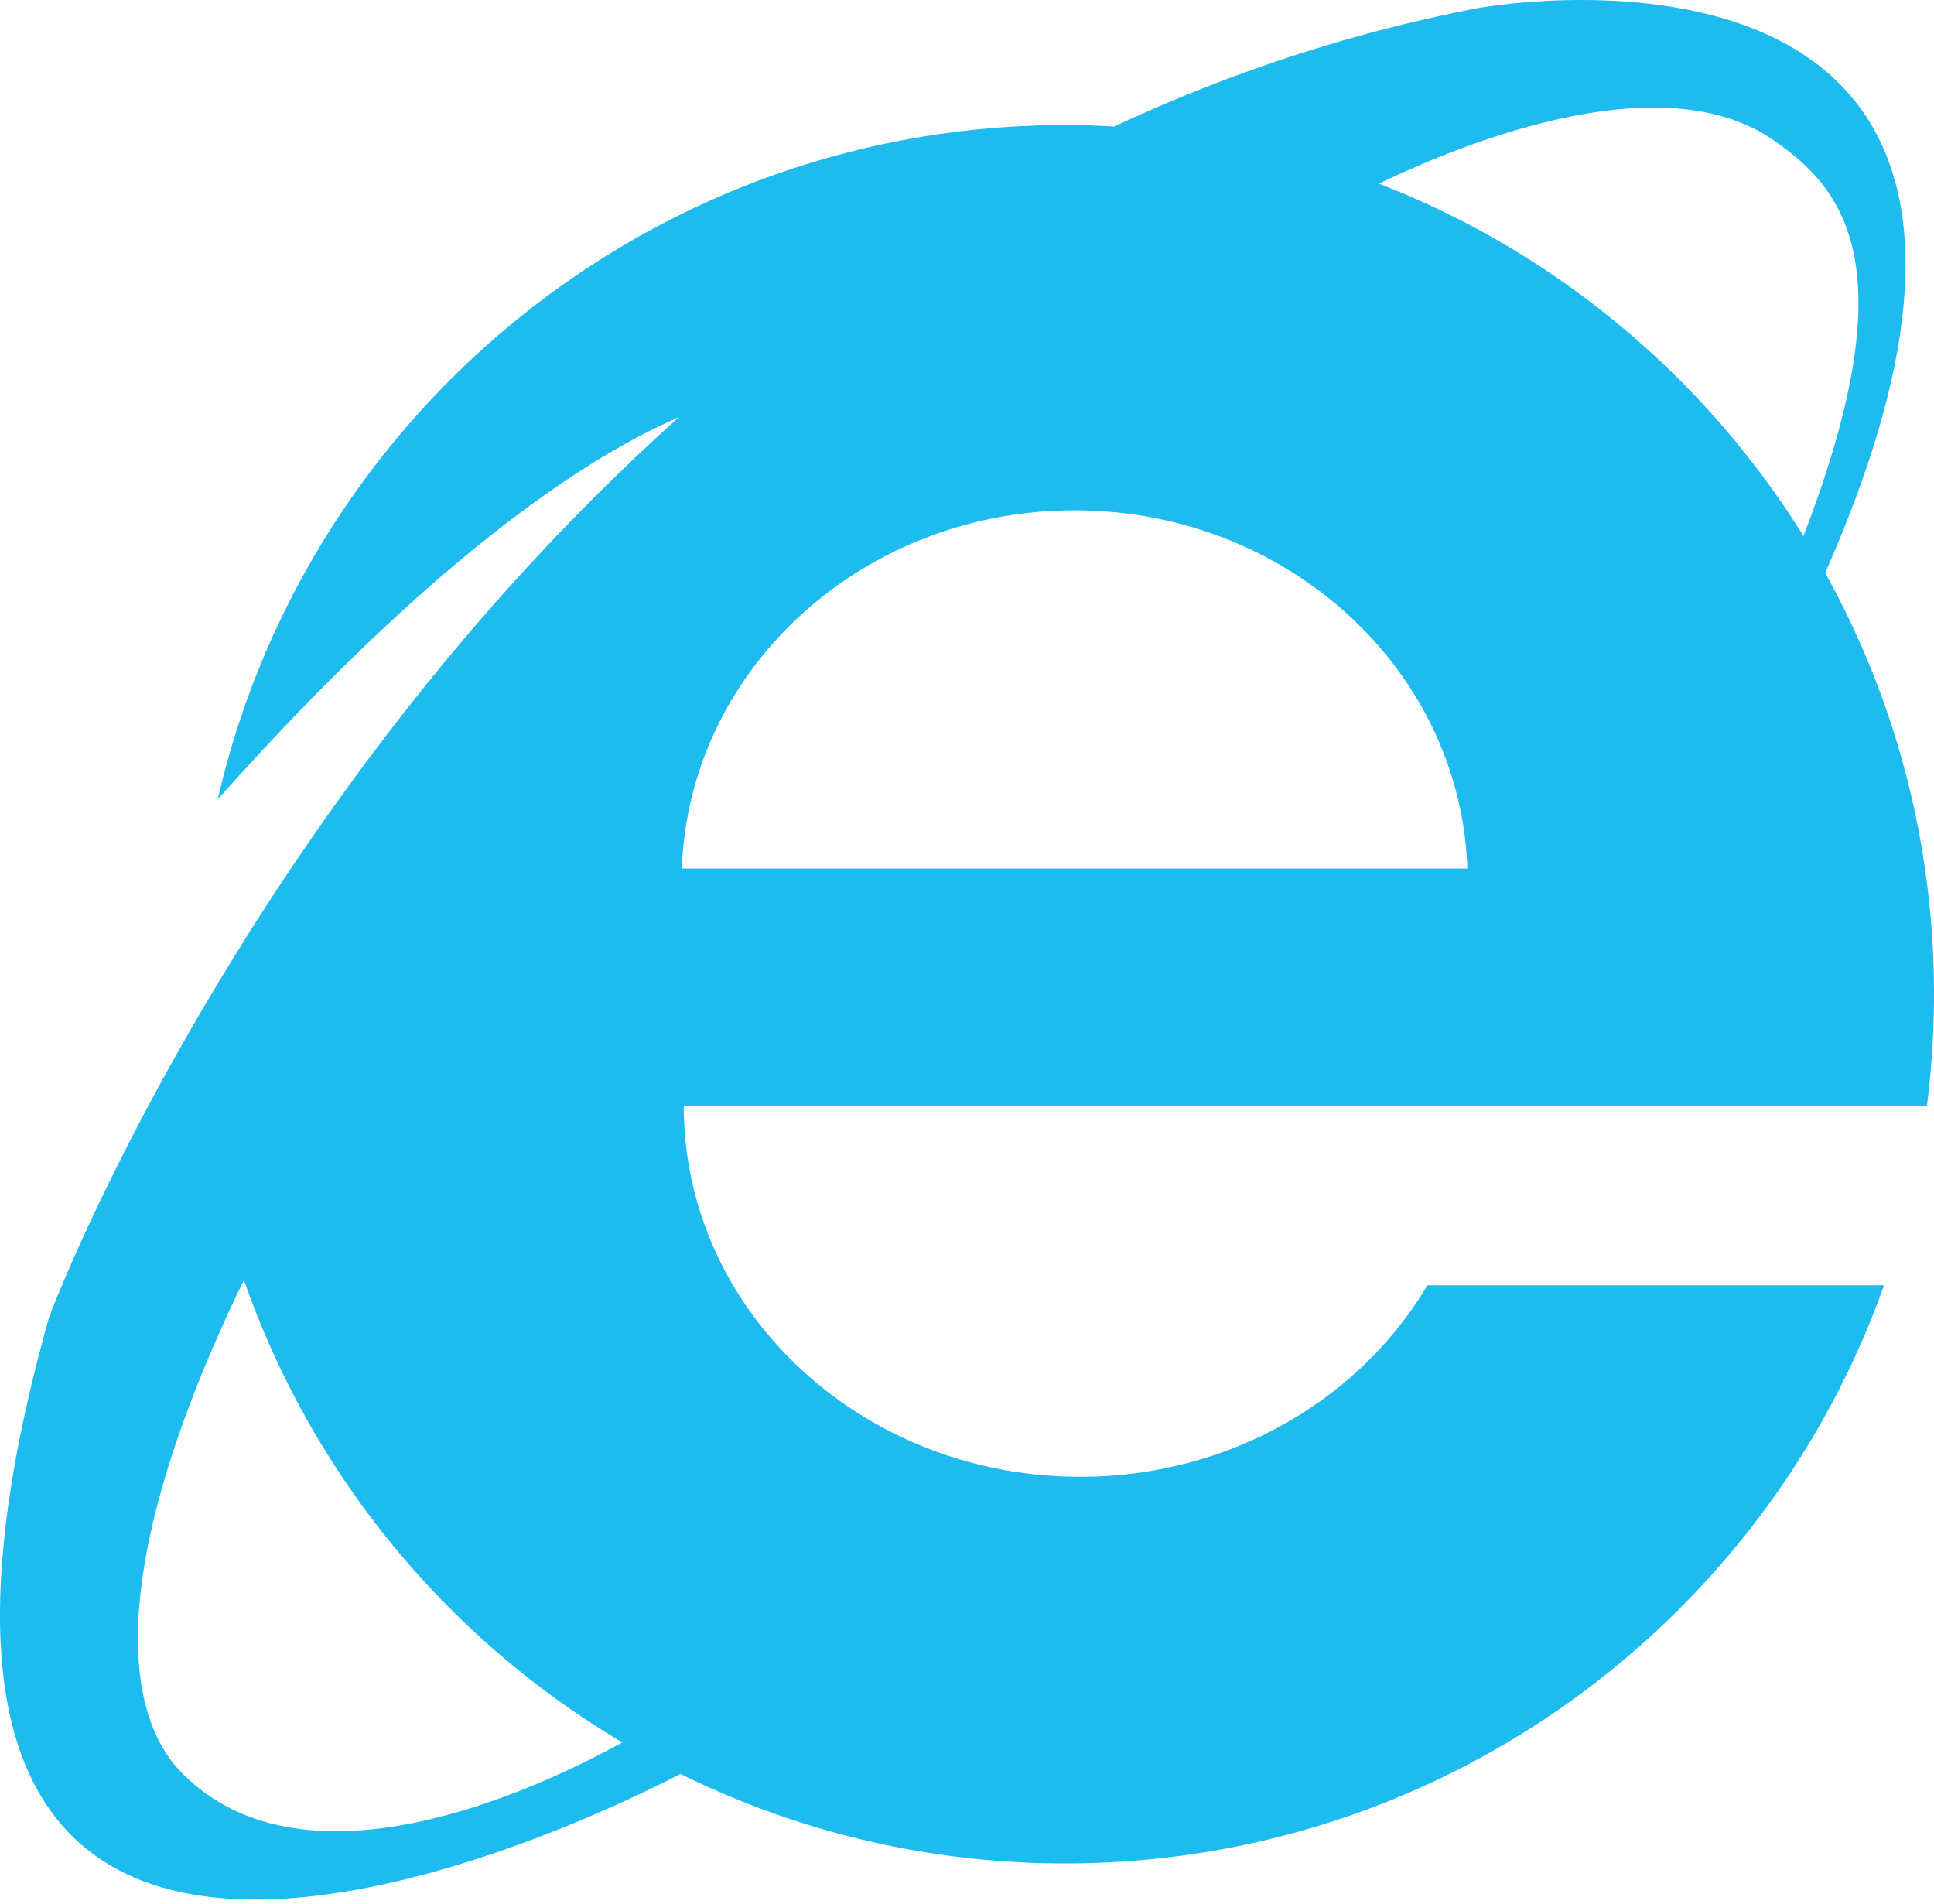 Internet Explorer 10 – 11 logo colors